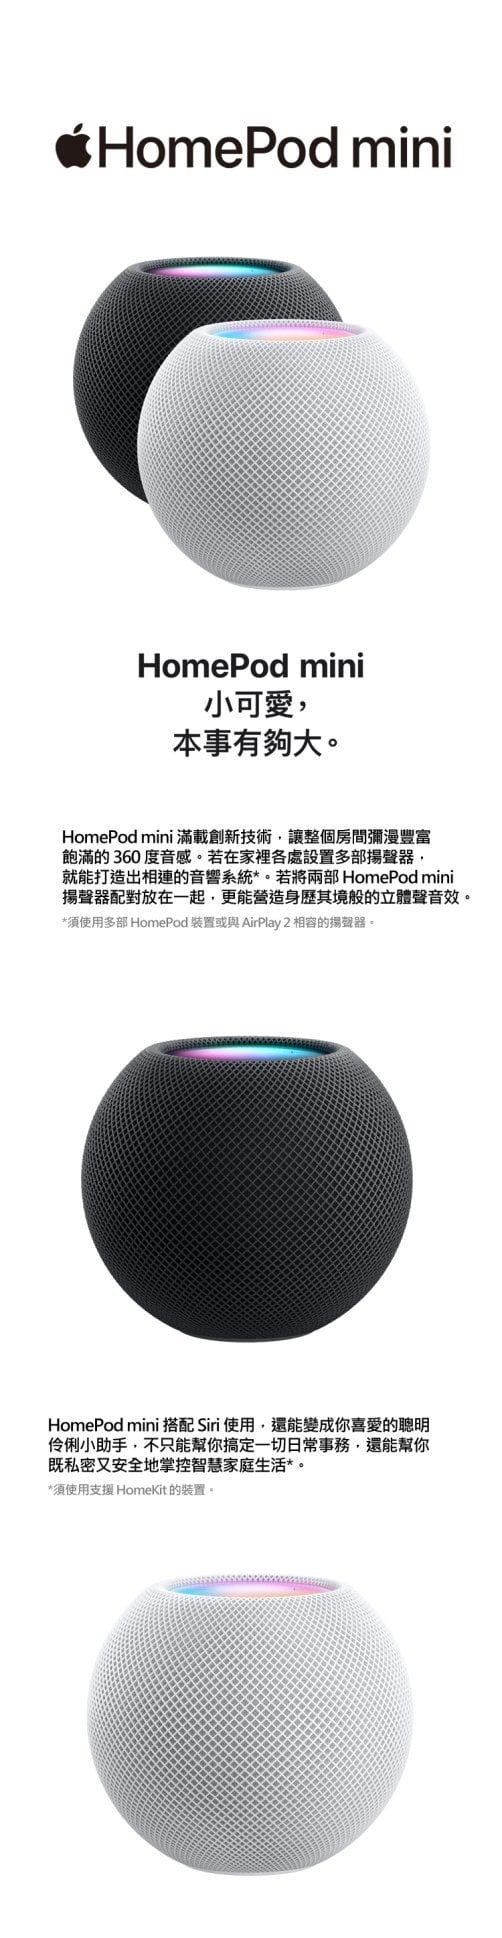 Apple Homepod mini 智慧喇叭橘/灰/白/ 藍/黃|會員獨享好康折扣活動